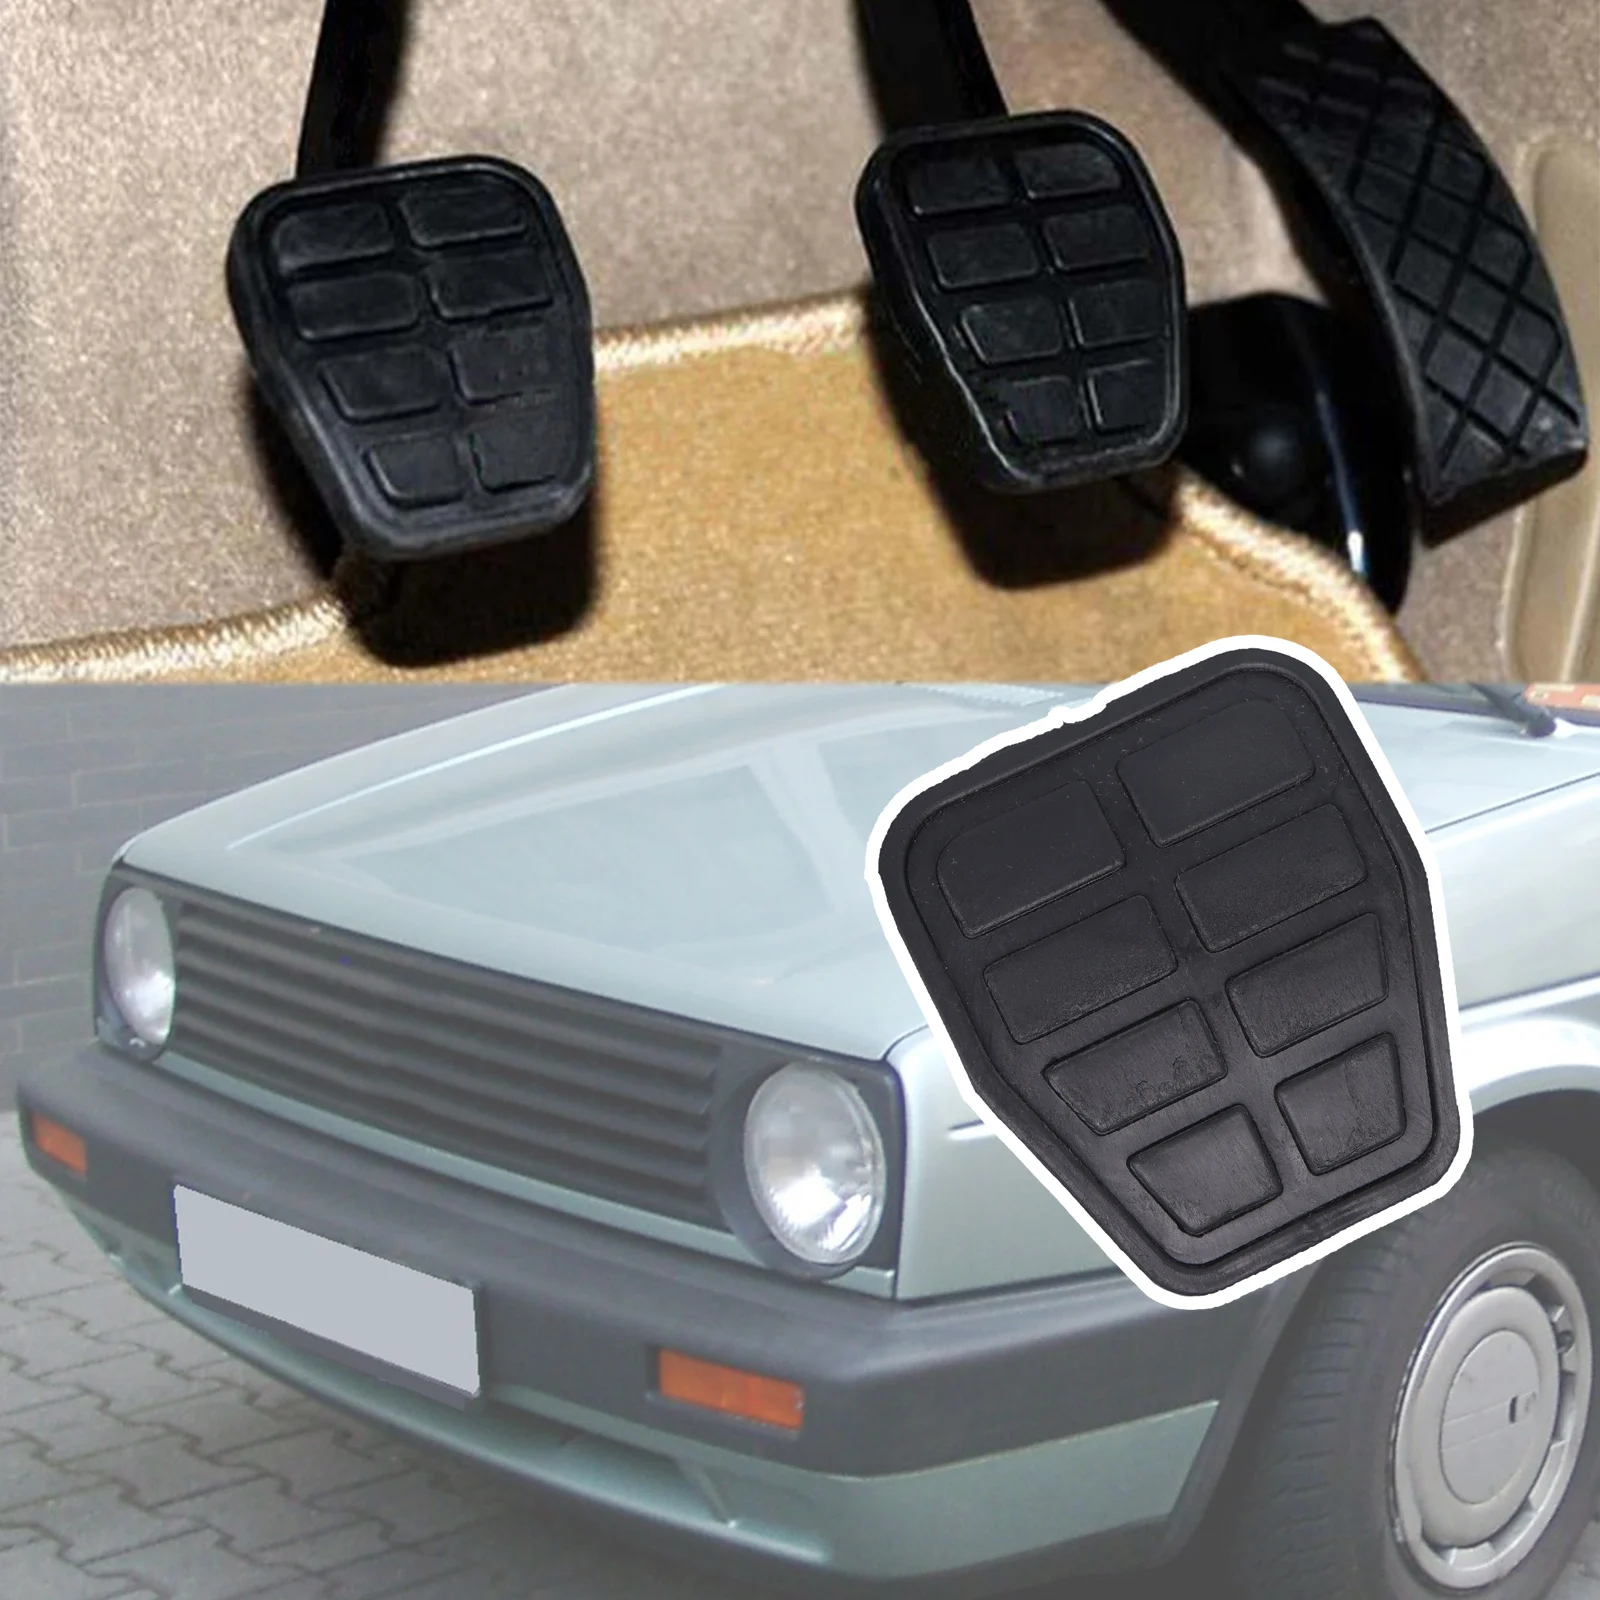 Rubber Brake Clutch Foot Pedal Pad For VW Golf 2 MK2 MK3 1E 1983 1984 - ... - $7.93